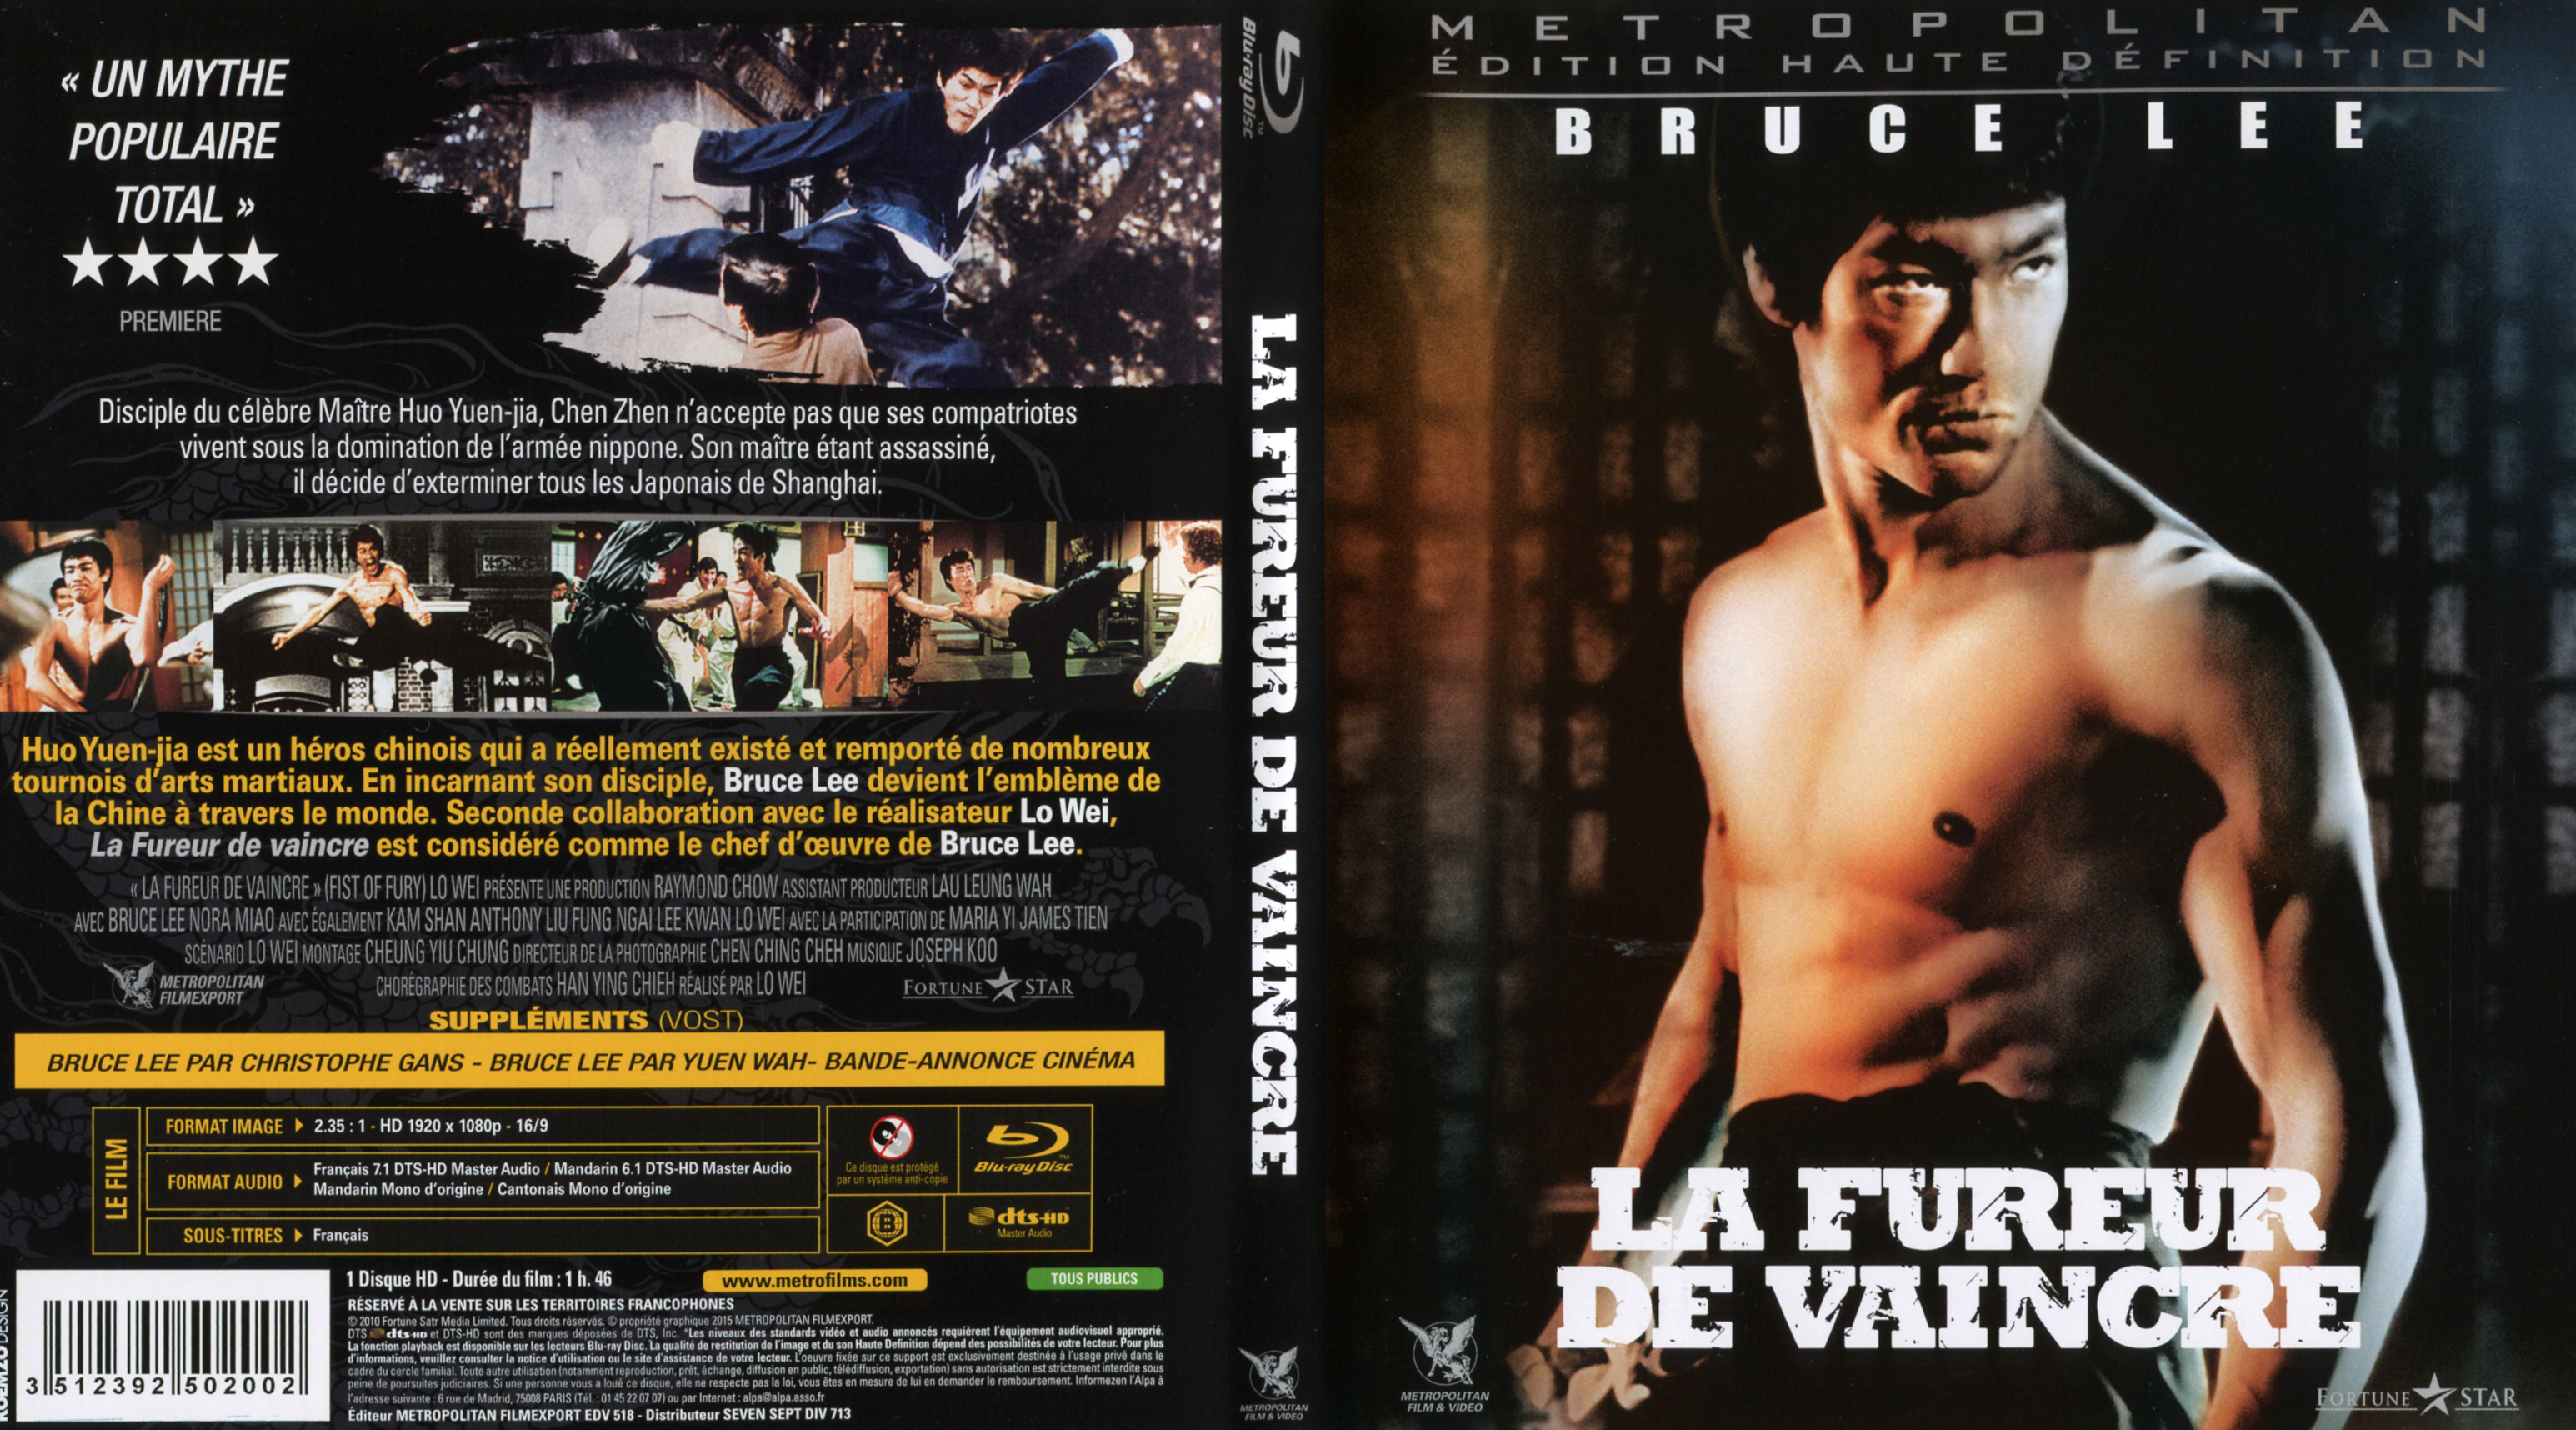 Jaquette DVD La fureur de vaincre (BLU-RAY)